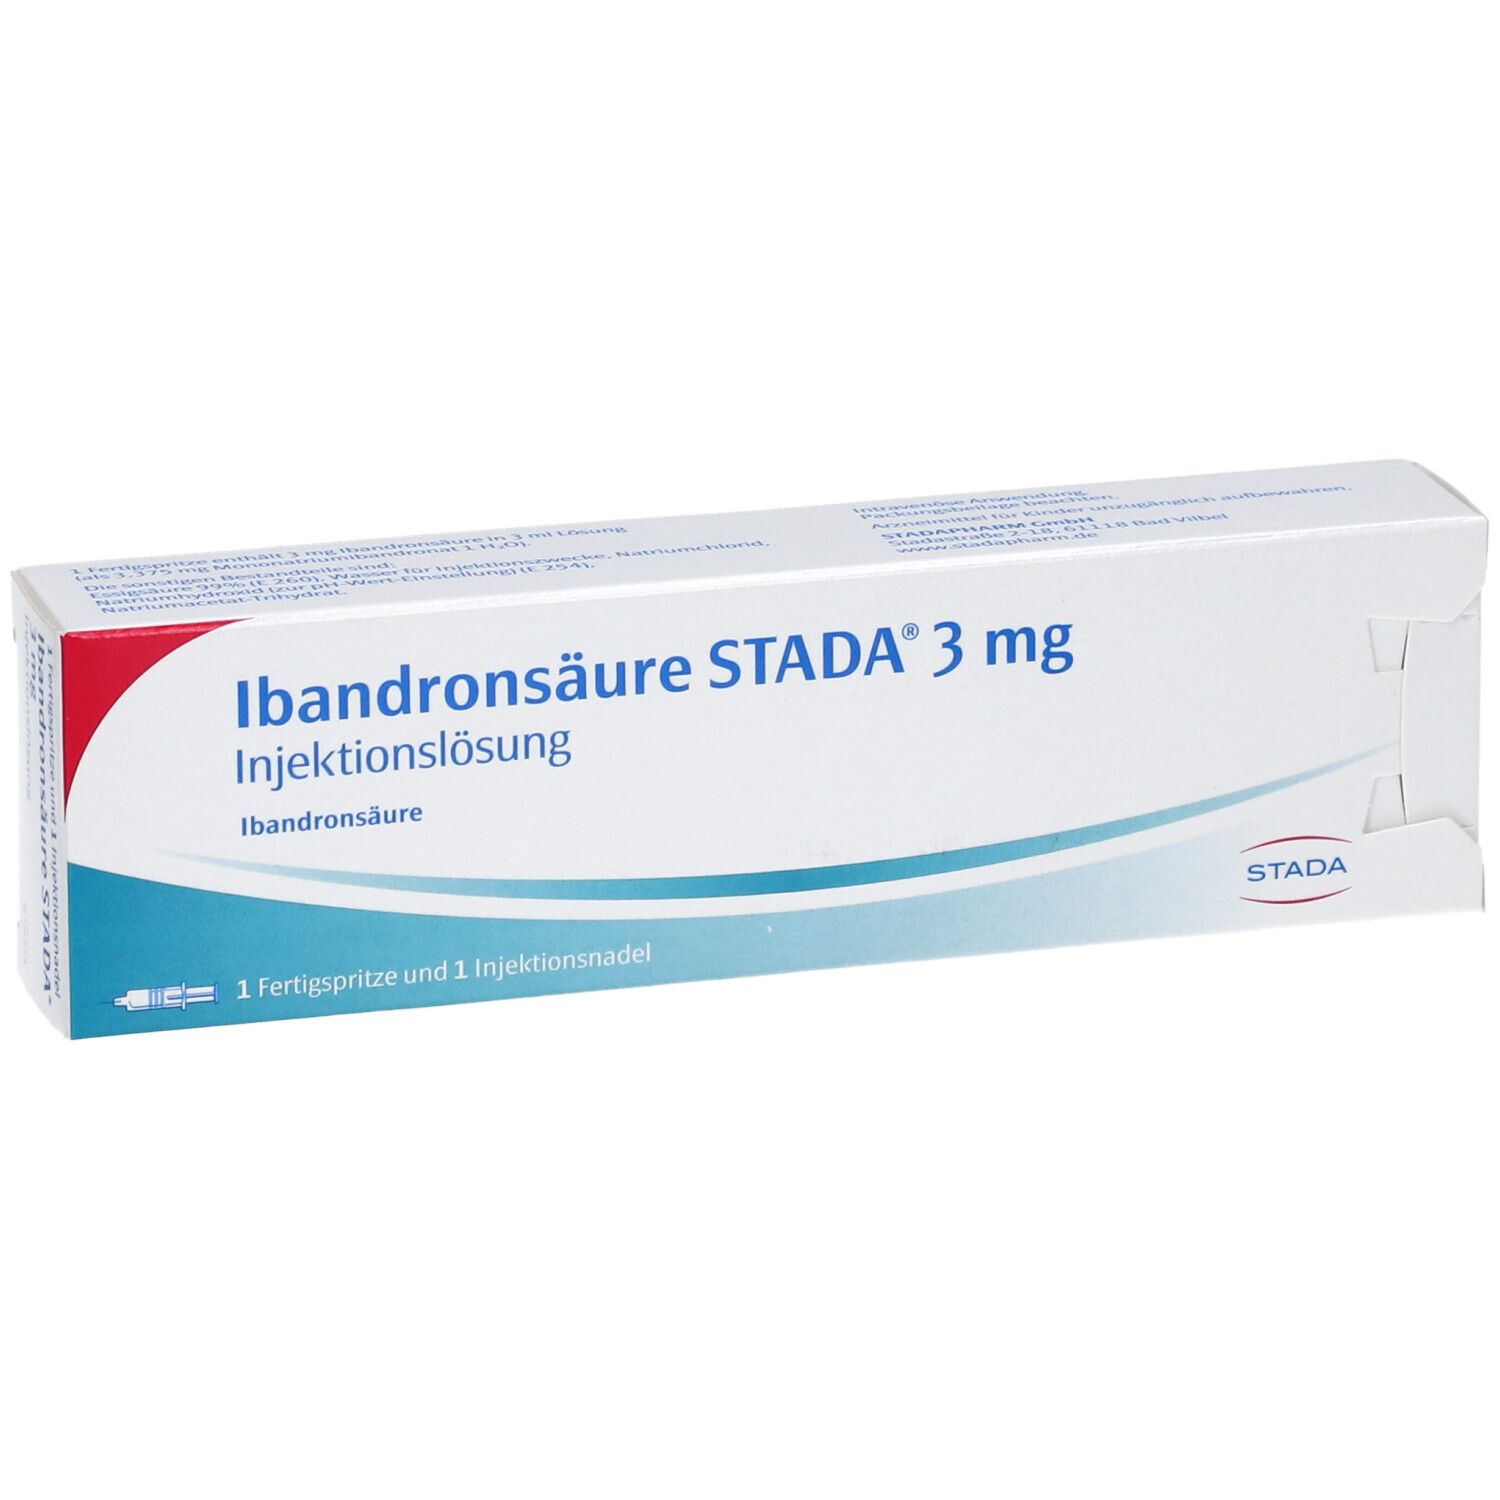 Ibandronsäure STADA® 3 mg